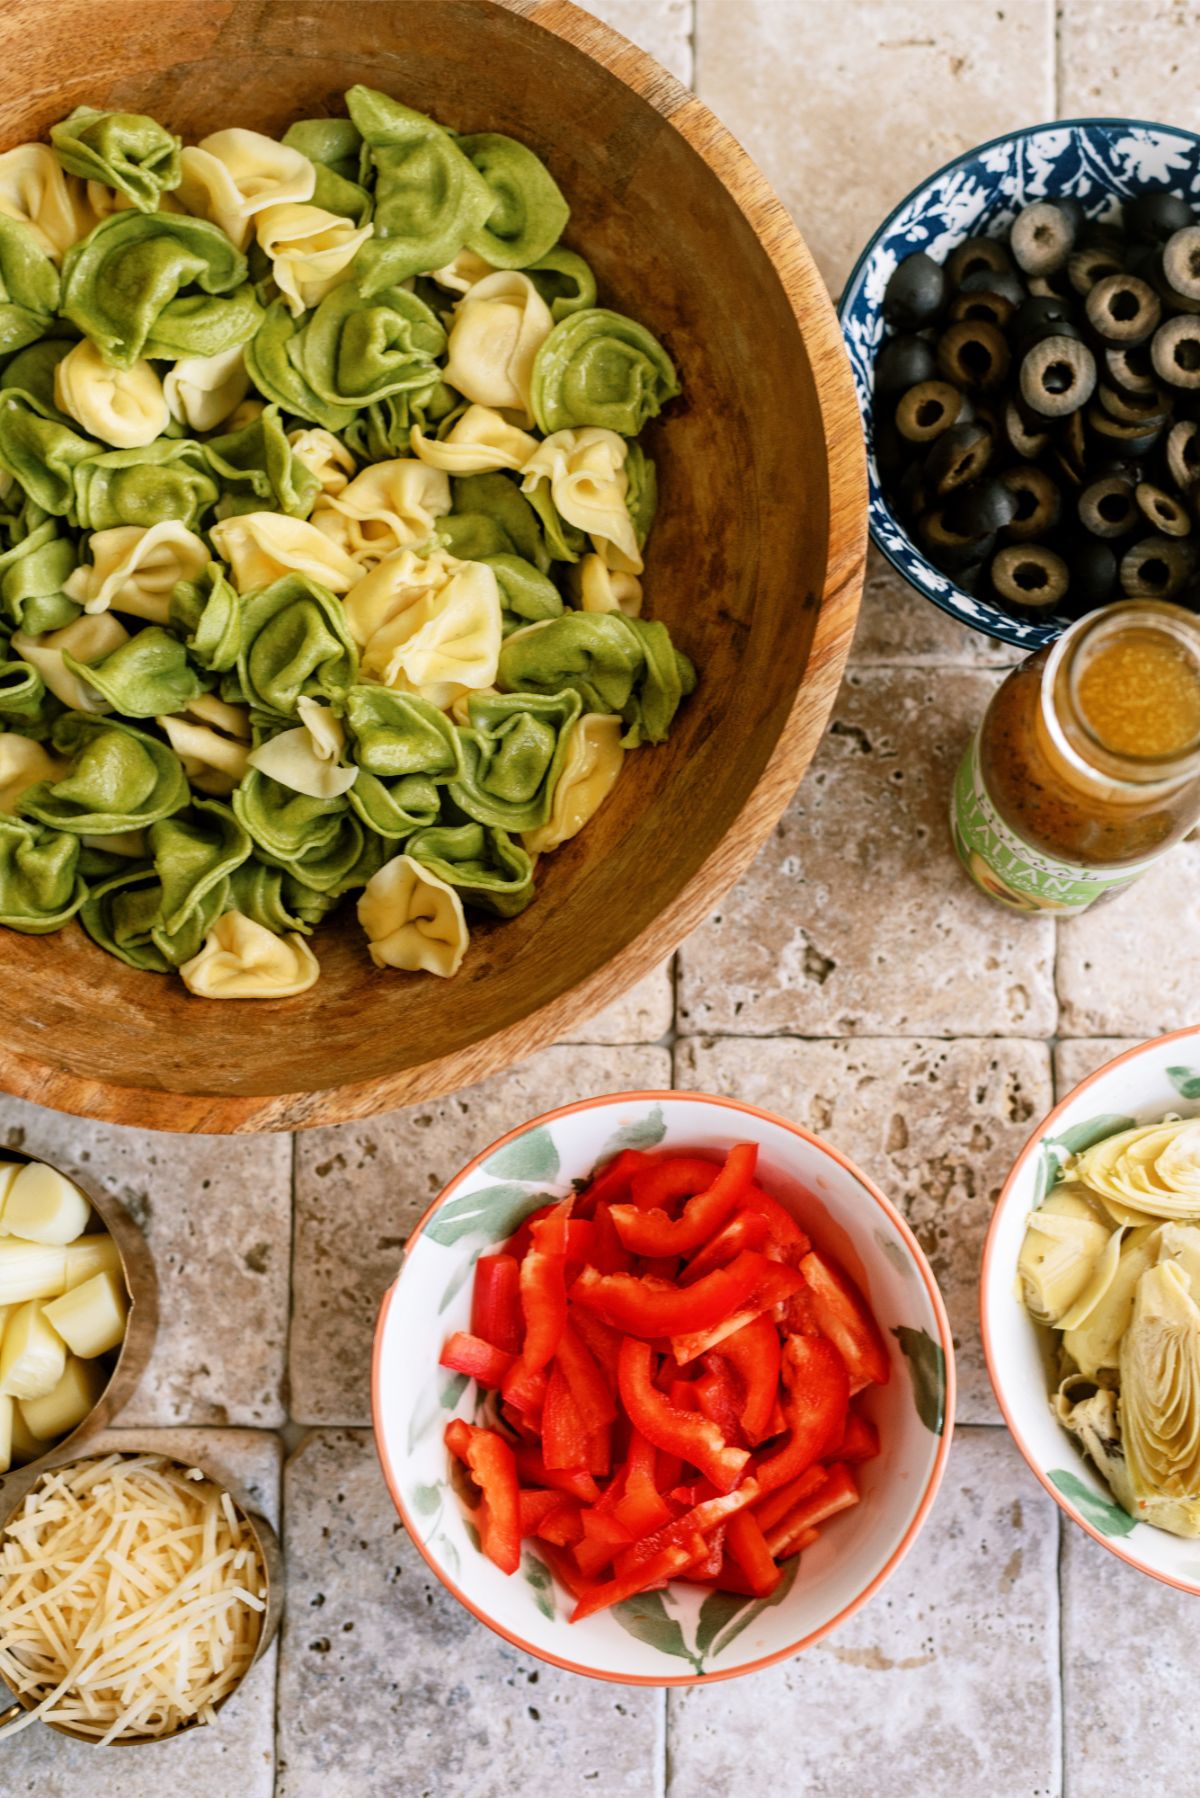 Ingredients needed to make Italian Tortellini Salad